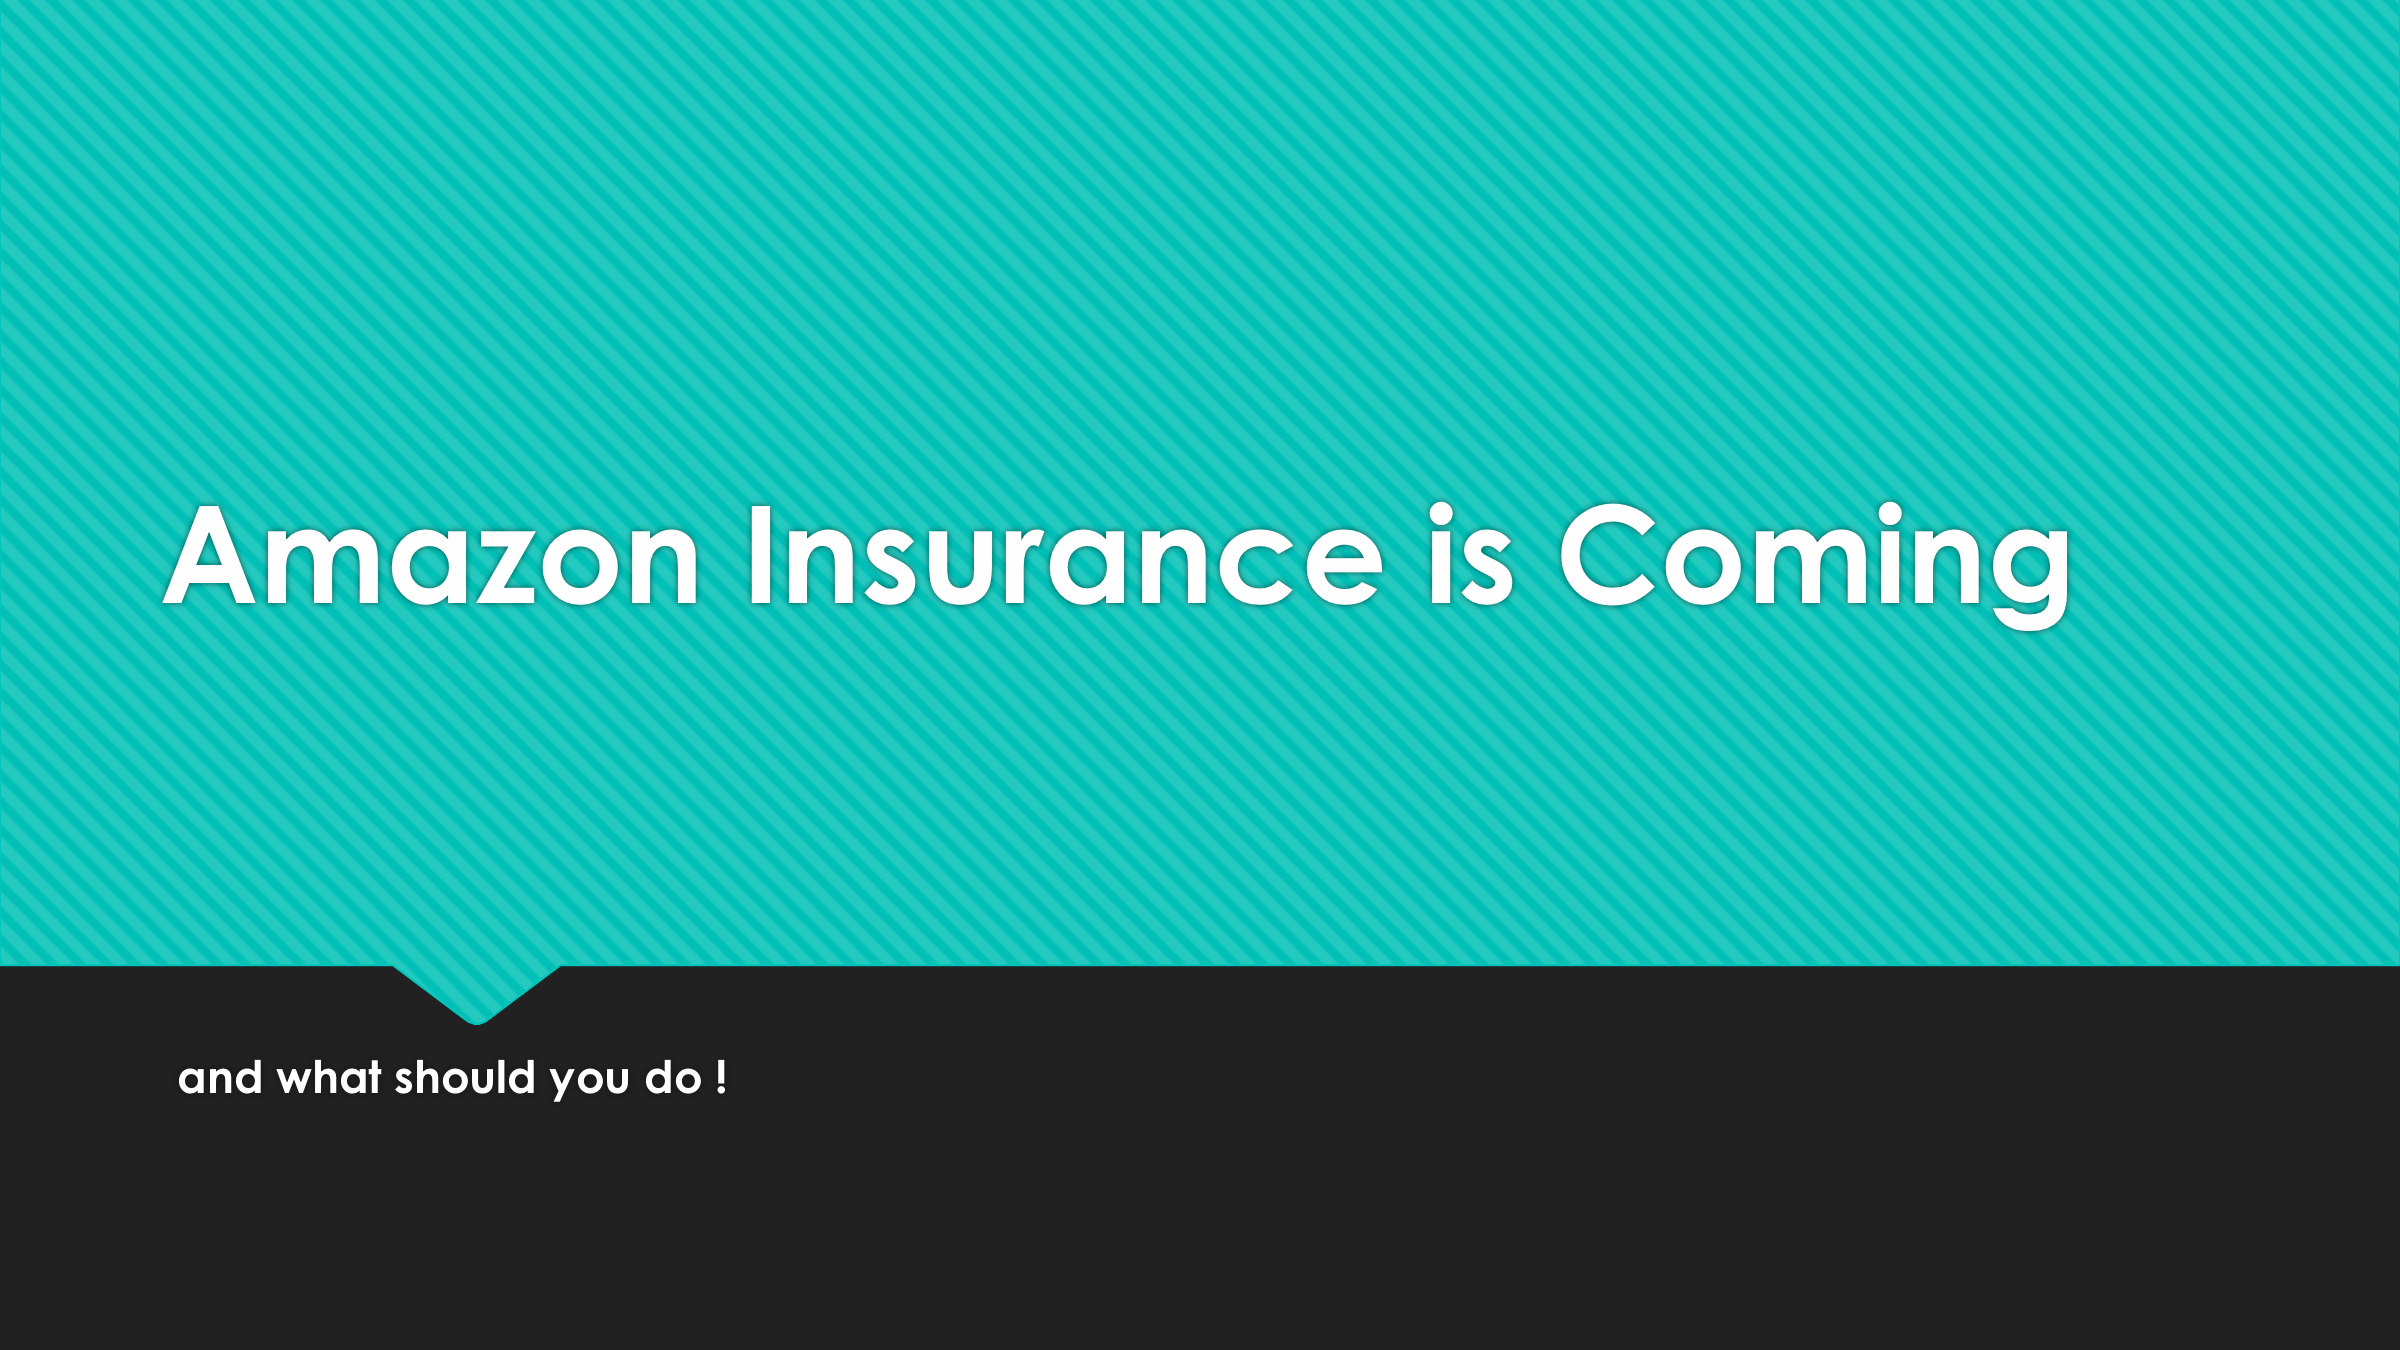 Amazon's new step: life insurance via this platform is just around the corner